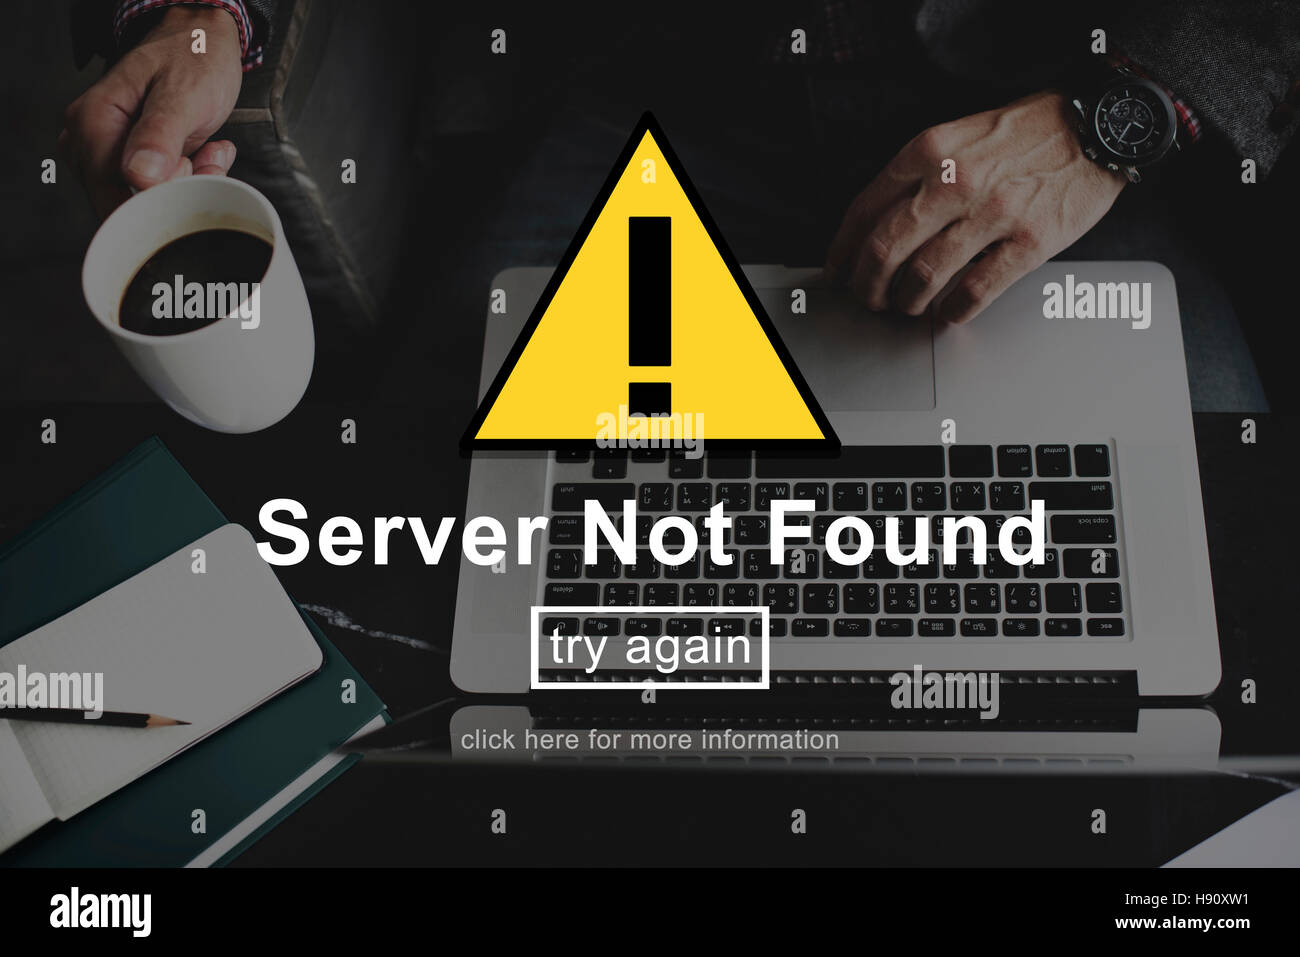 Server Not Found Error Danger Caution Warning Concept Stock Photo